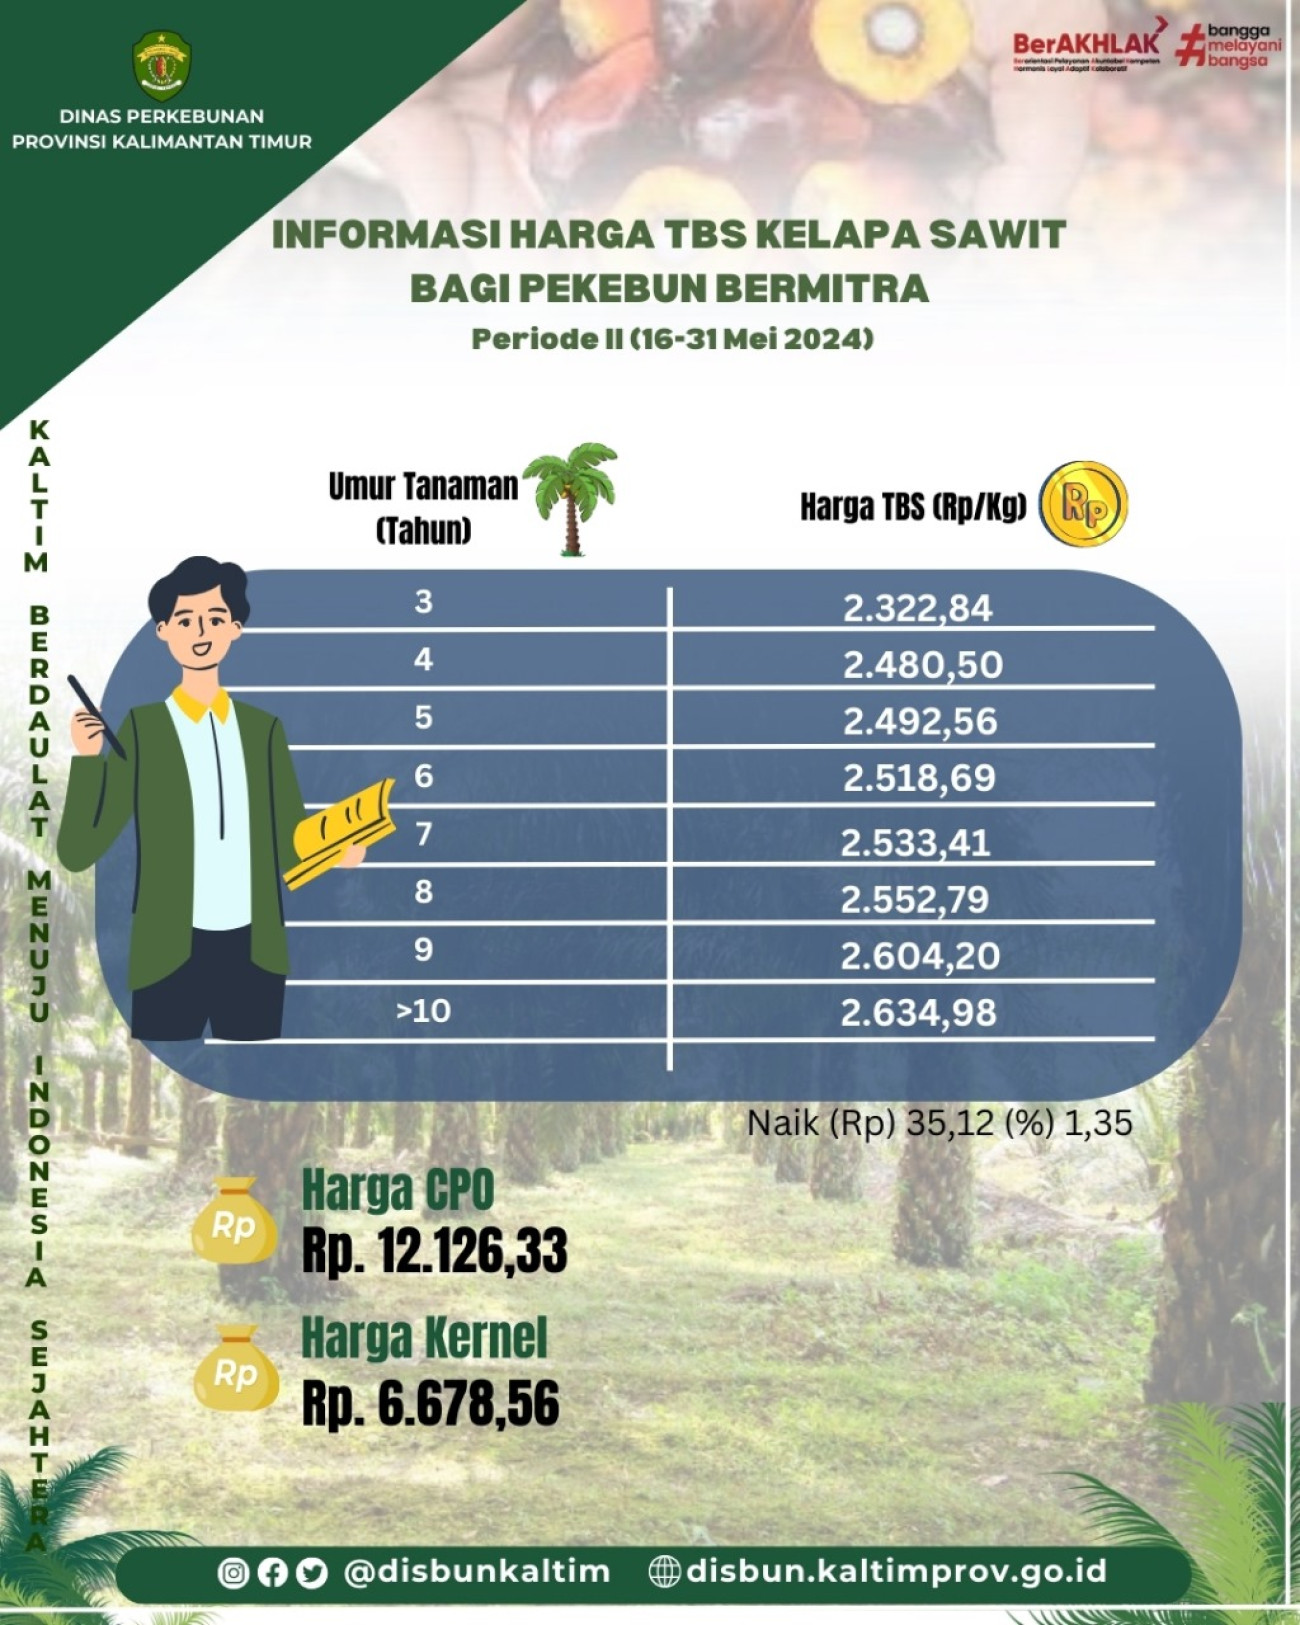 Informasi Harga TBS Kelapa Sawit bagi Pekebun Mitra Periode II Bulan Mei 2024